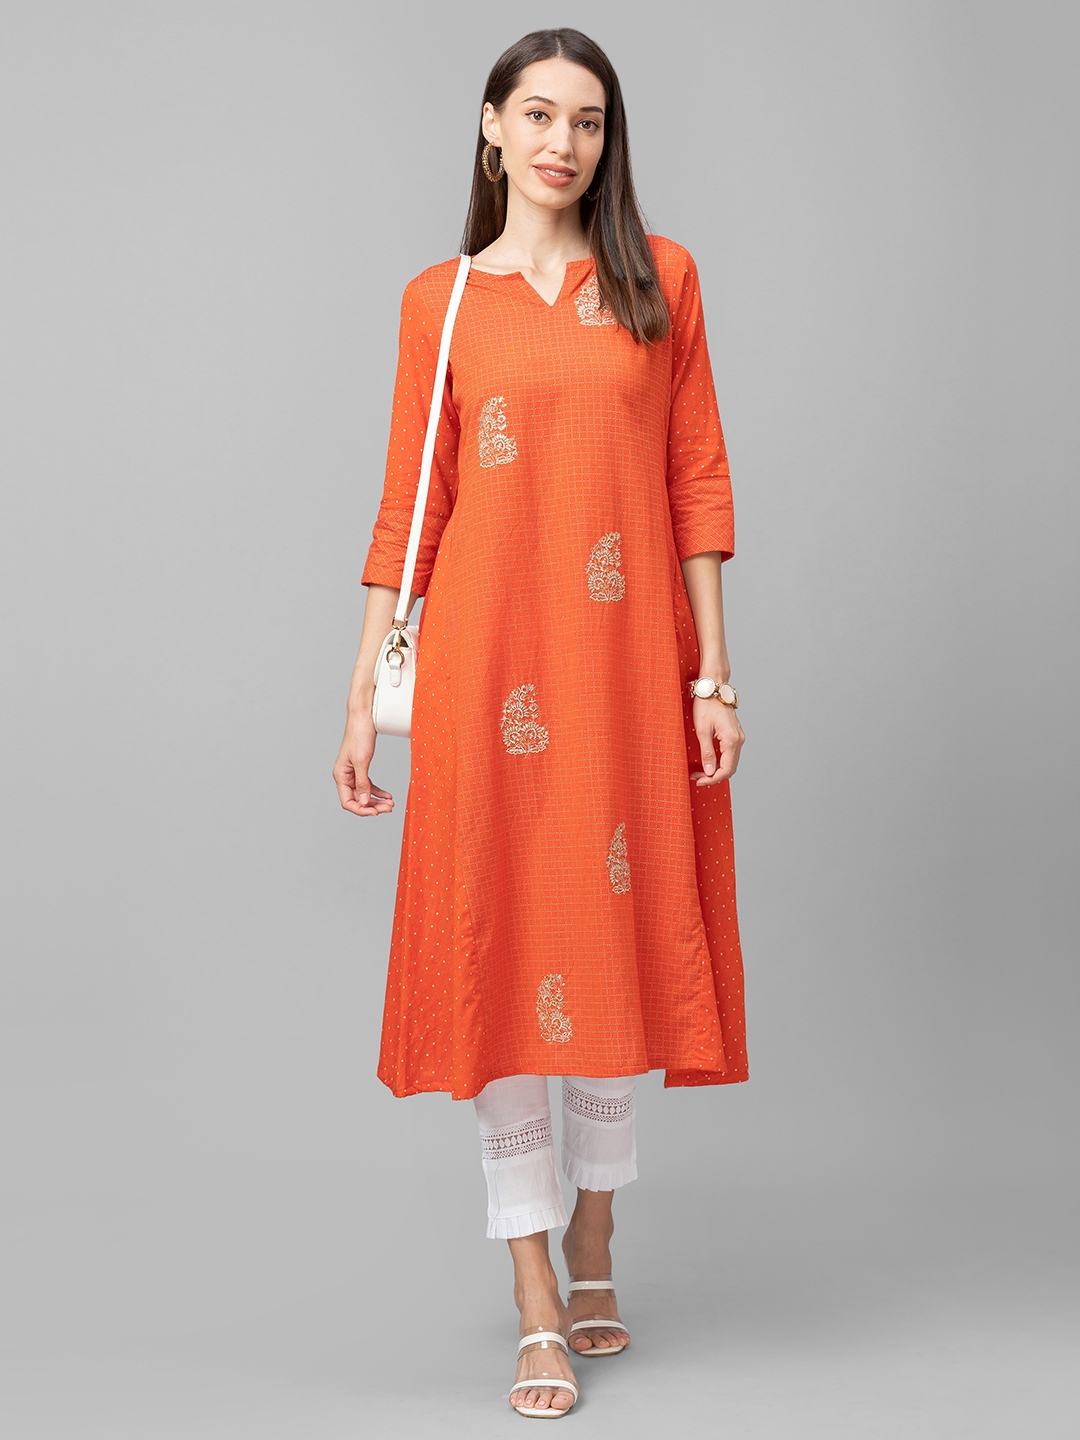 globus | Women's Orange Cotton Printed Kurtas 1